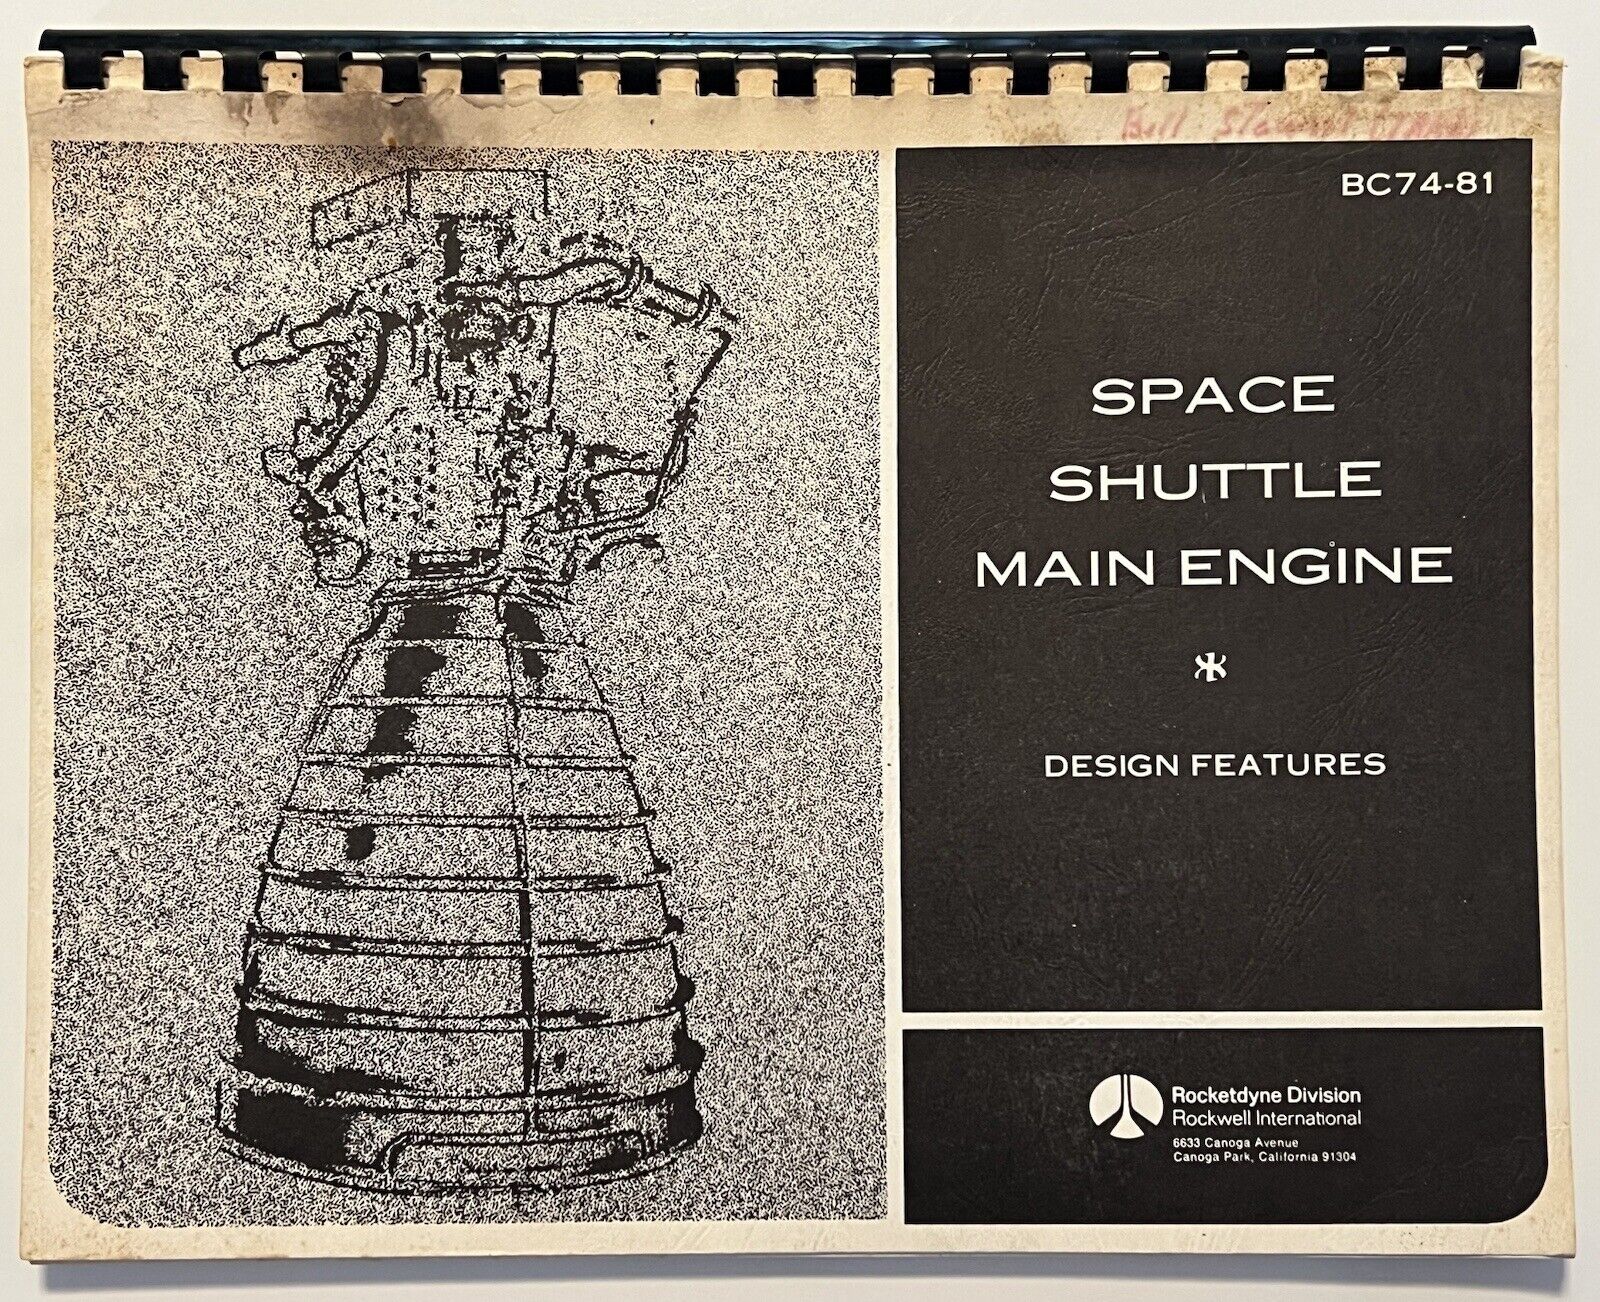 *RARE* 1974 Rocketdyne “SPACE SHUTTLE MAIN ENGINE” BC74-81 Original NASA MANUAL